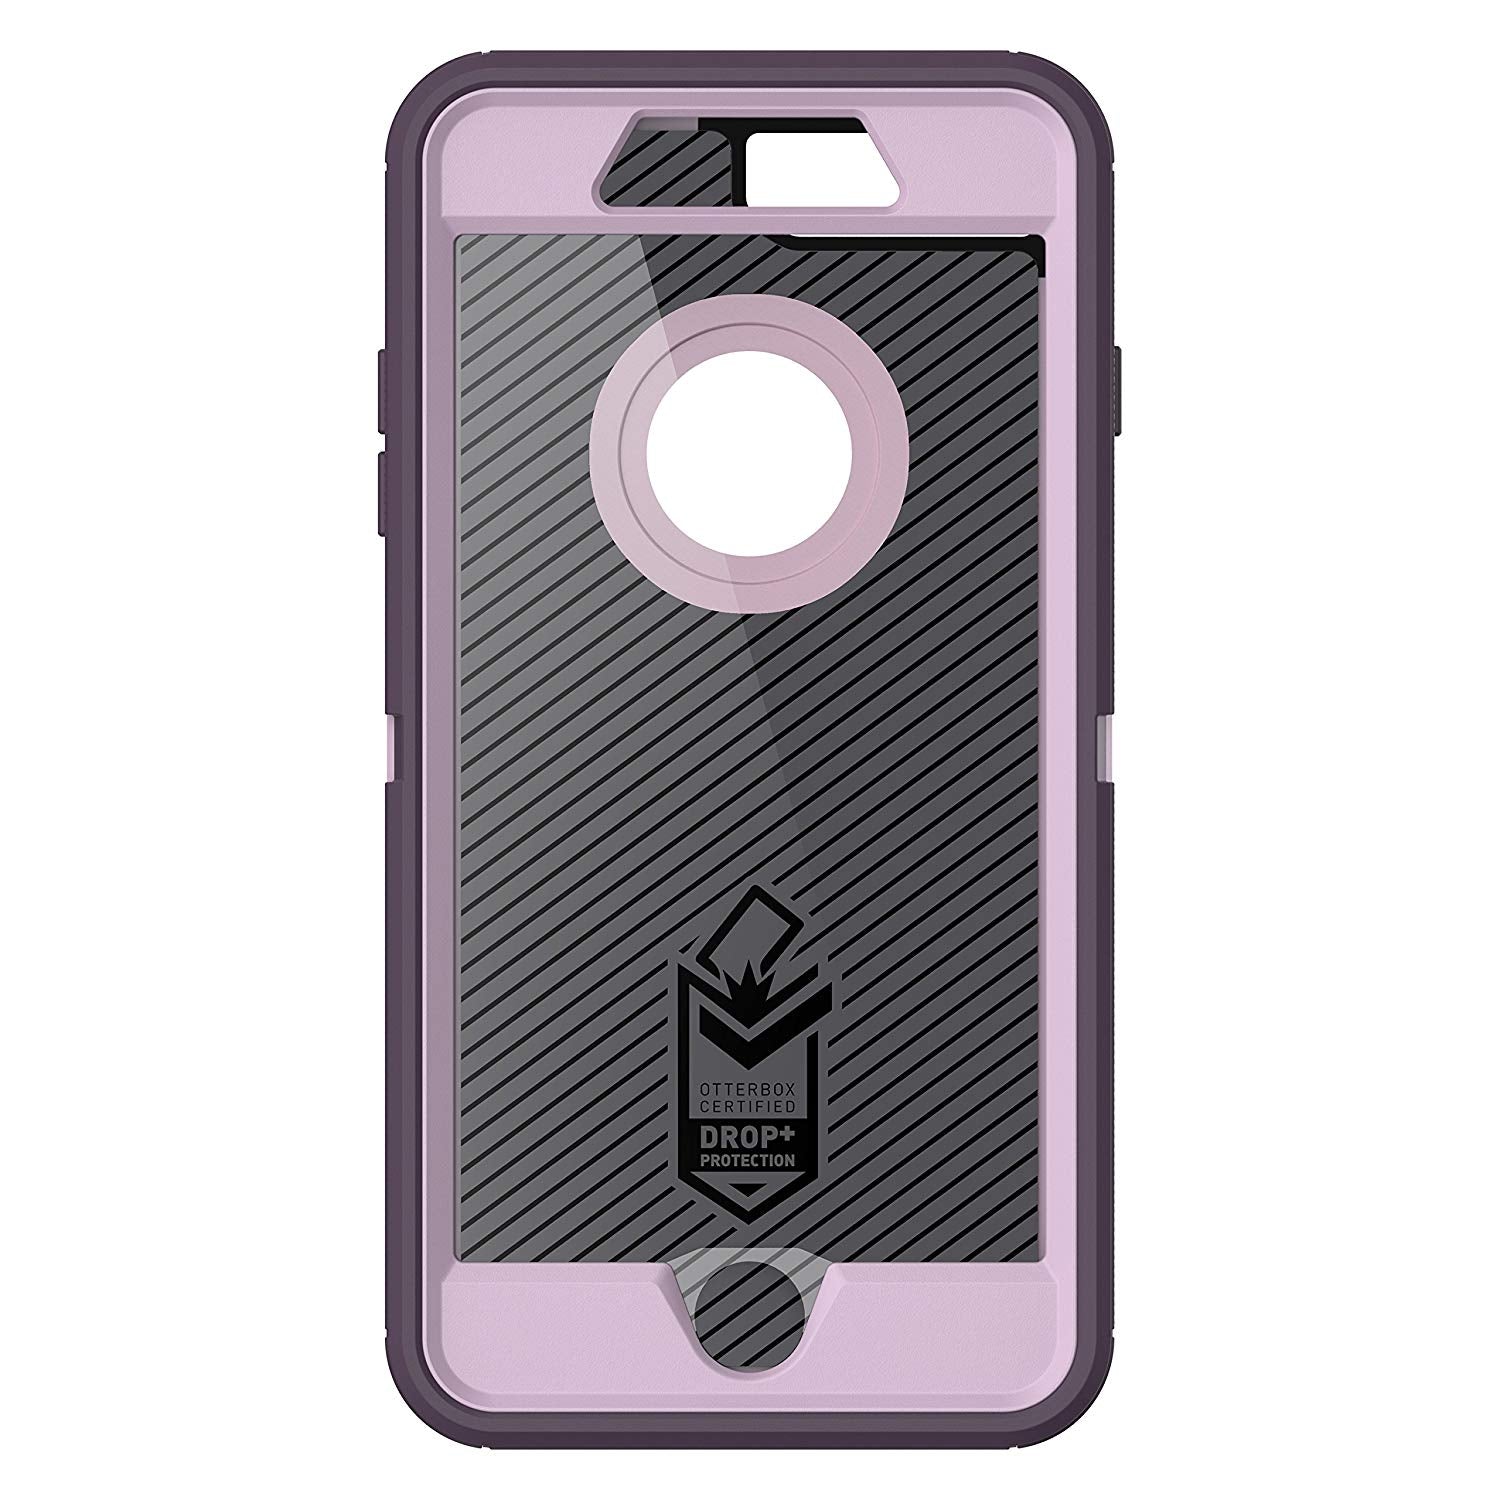 OtterBox DEFENDER SERIES Case iPhone 7 Plus / iPhone 8 Plus - Purple Nebula